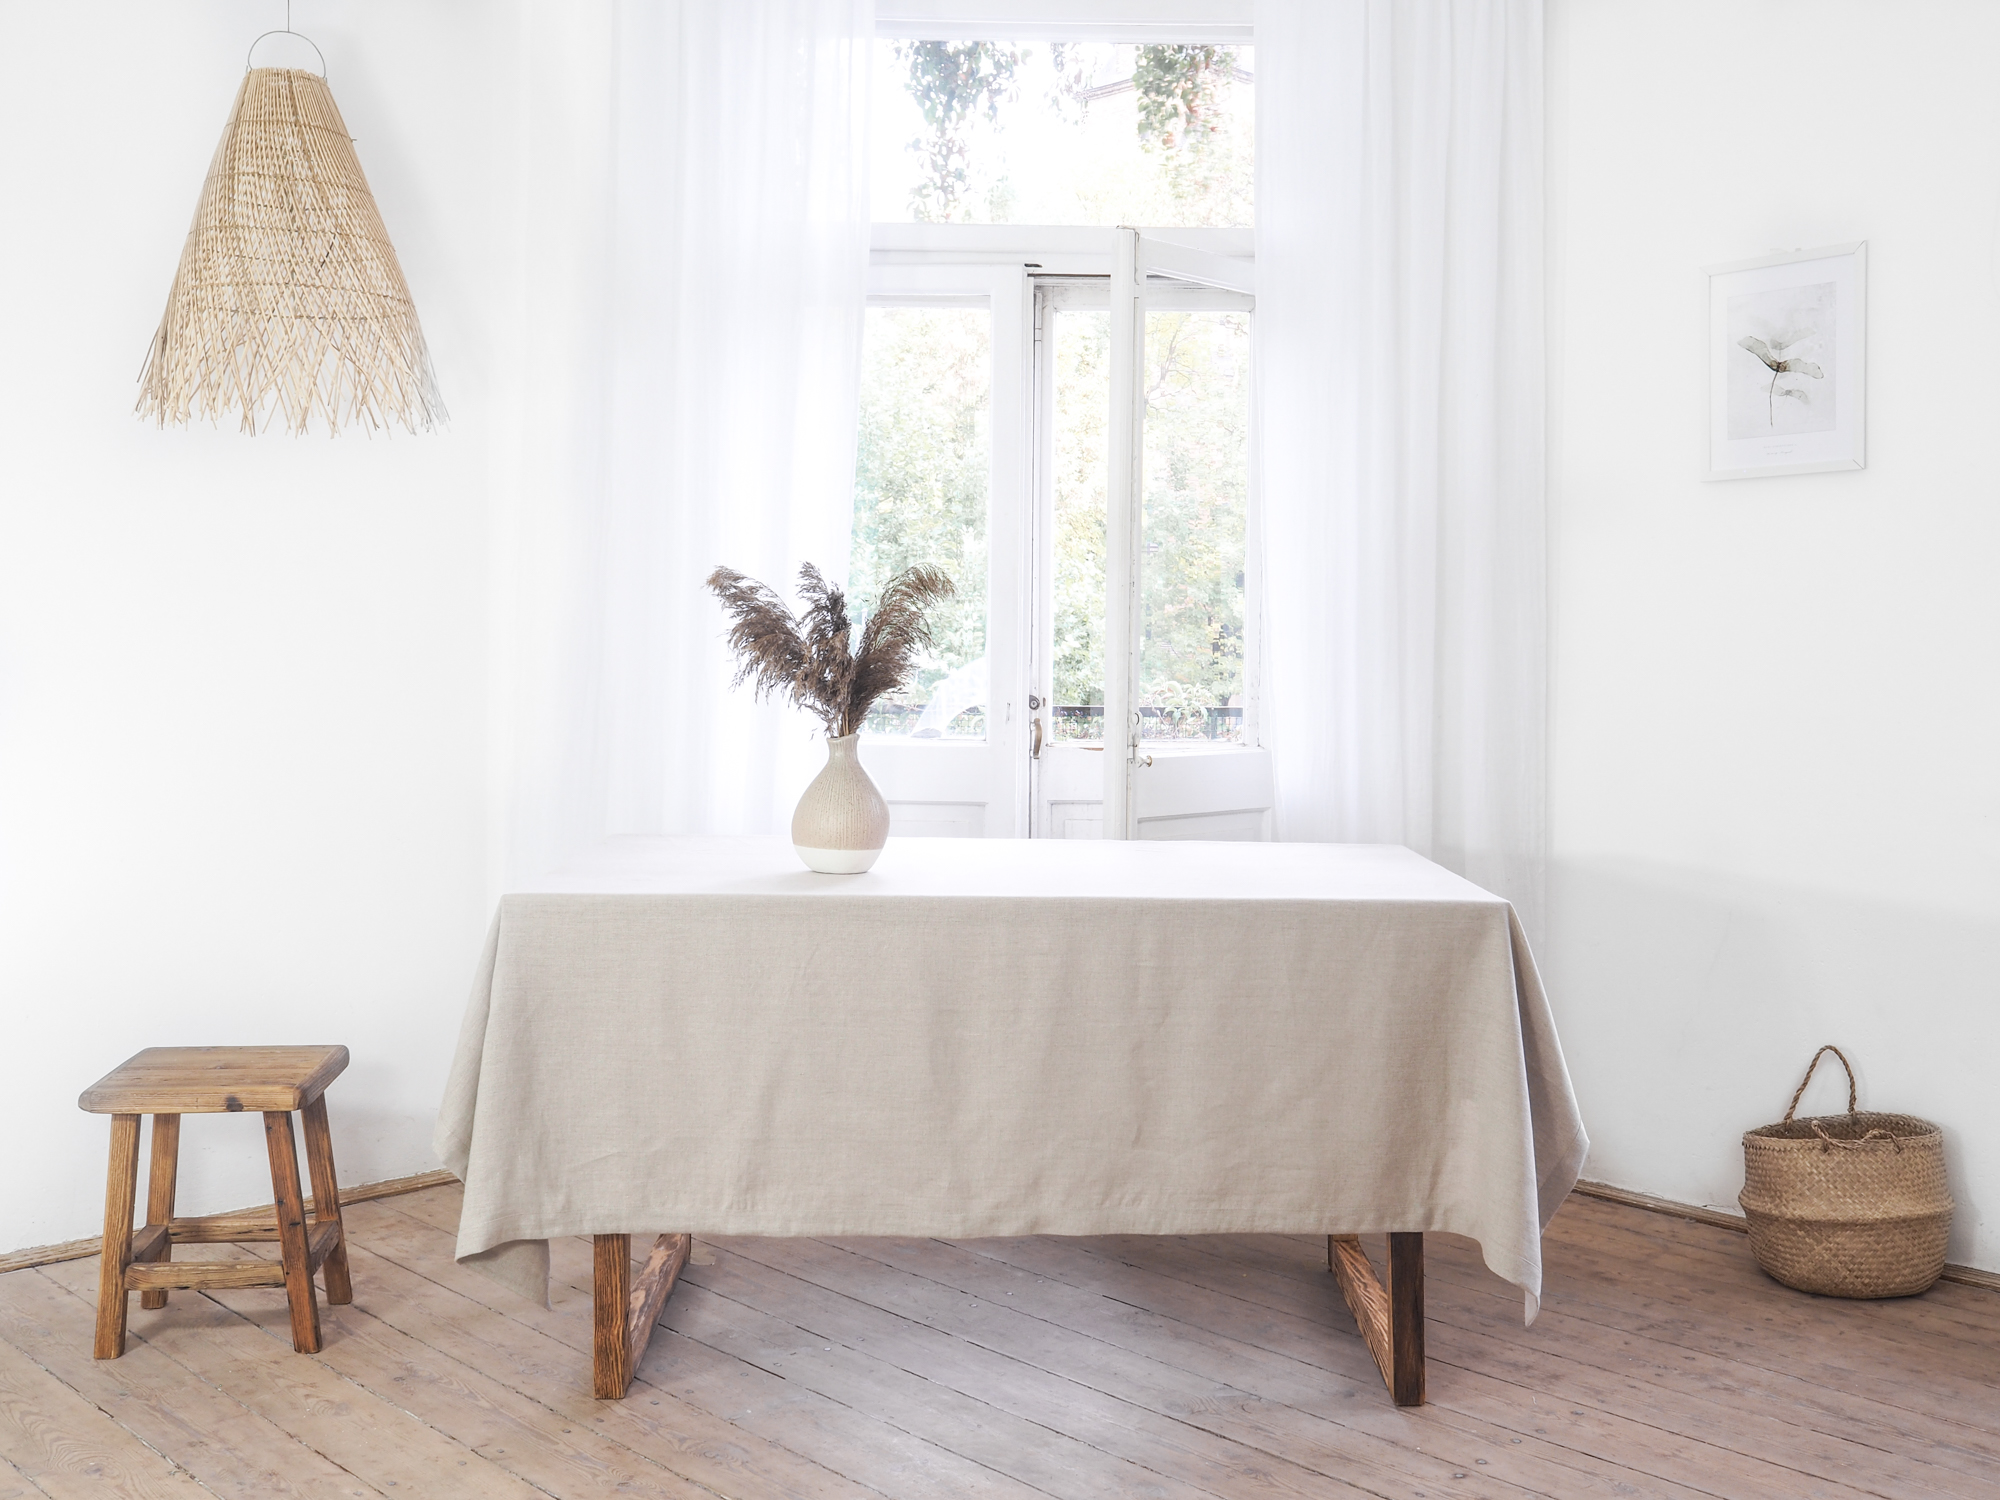 Solid linen tablecloth